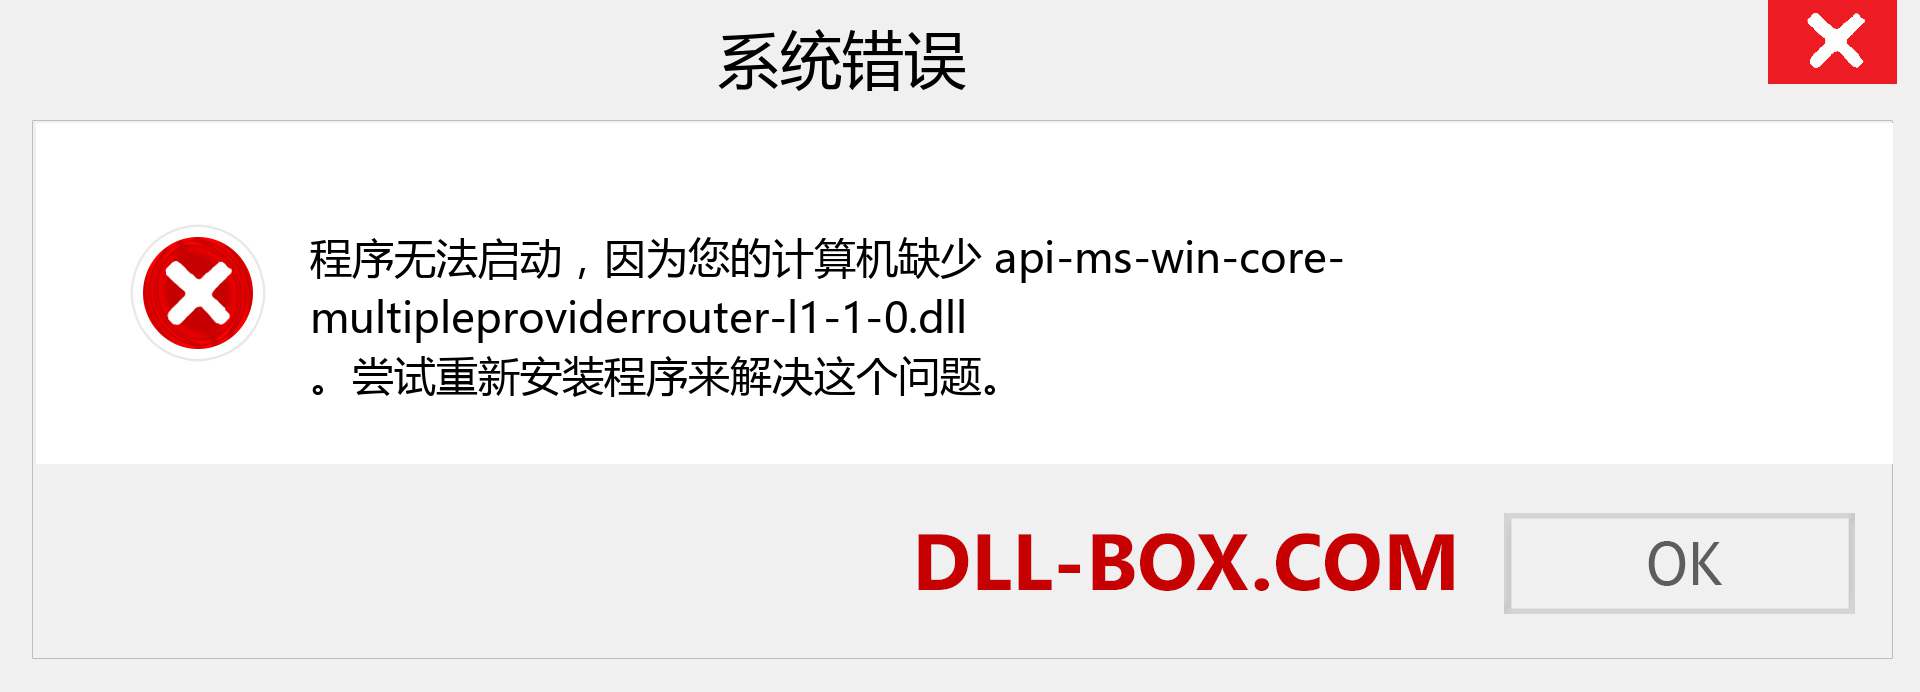 api-ms-win-core-multipleproviderrouter-l1-1-0.dll 文件丢失？。 适用于 Windows 7、8、10 的下载 - 修复 Windows、照片、图像上的 api-ms-win-core-multipleproviderrouter-l1-1-0 dll 丢失错误